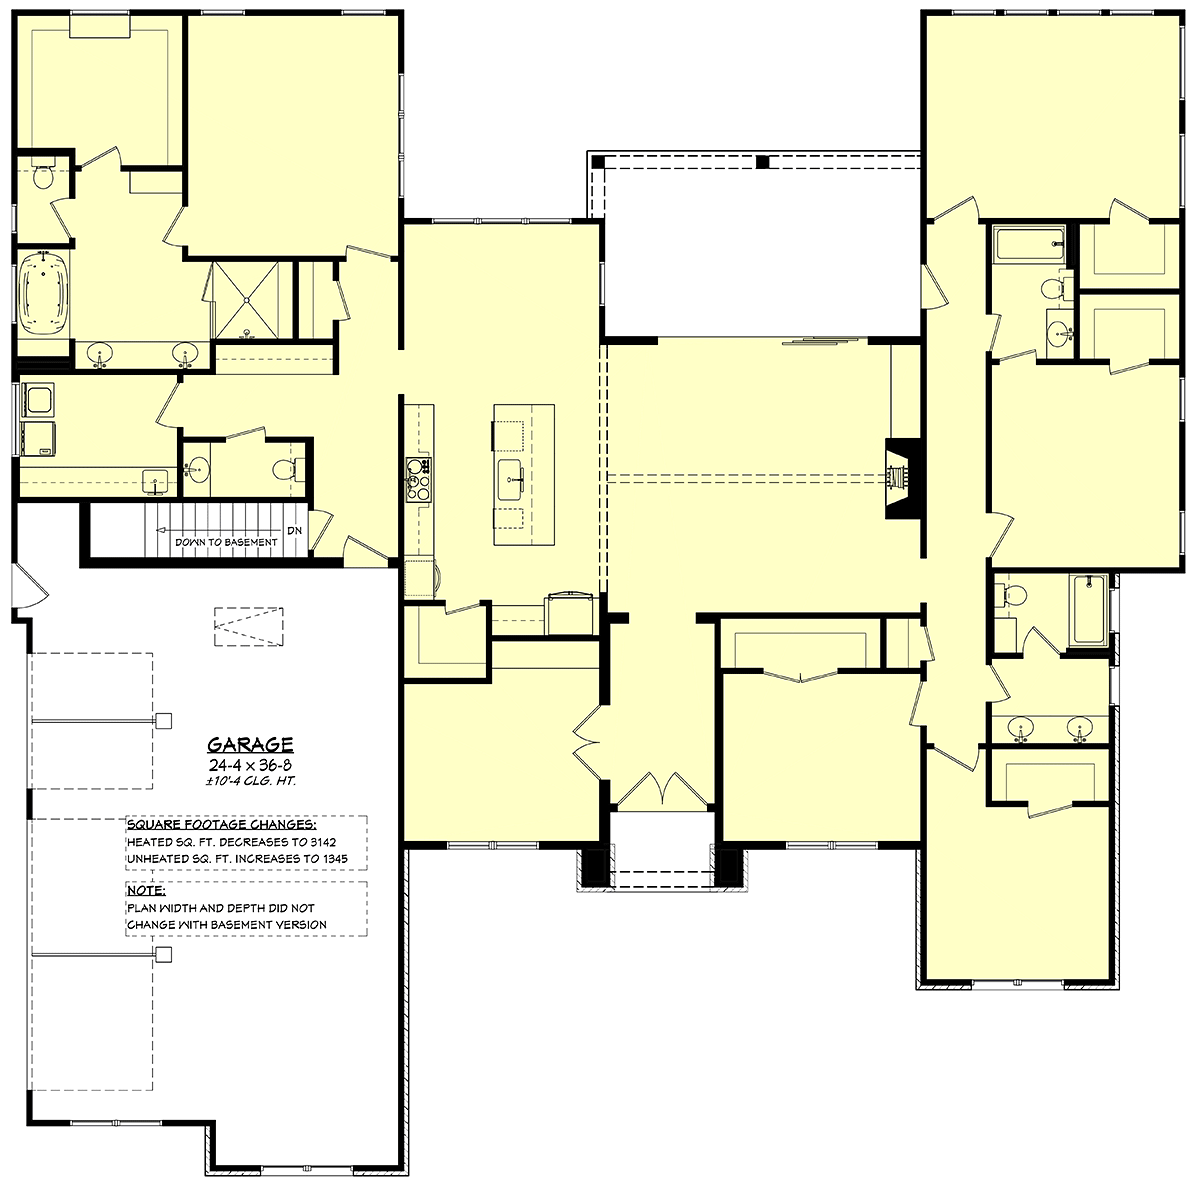 House Plan 80867 Alternate Level One